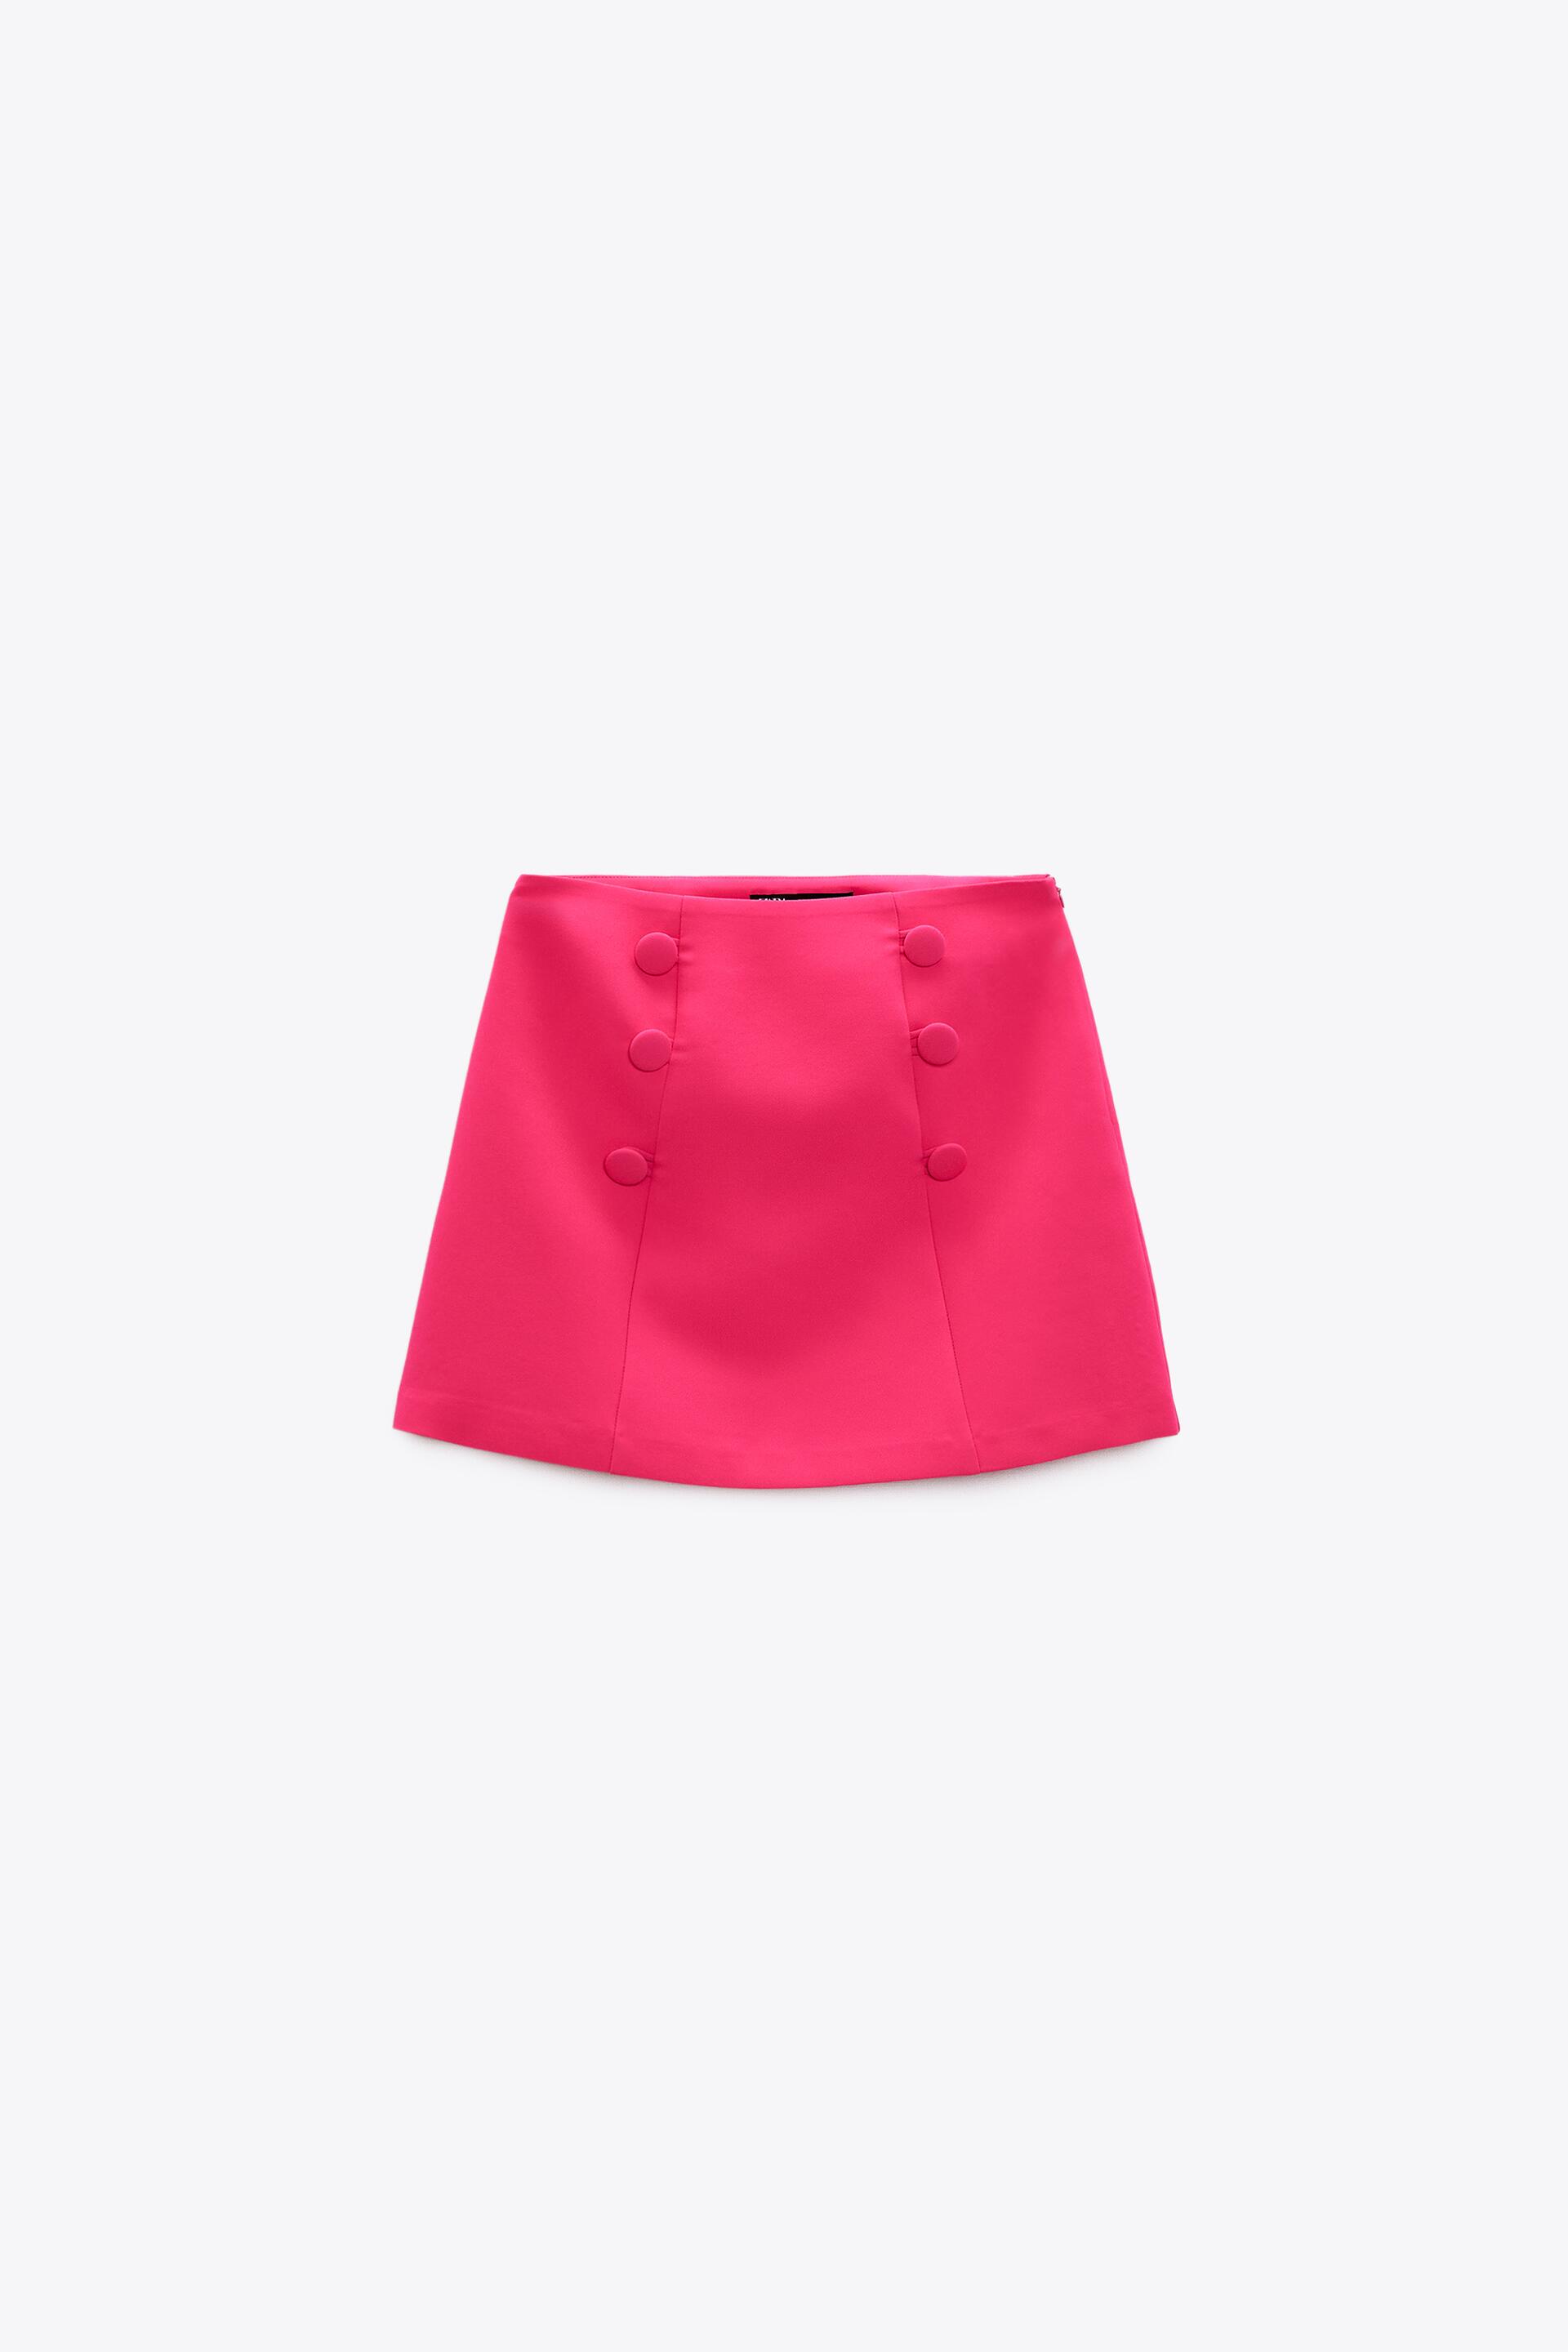 ZARA Button Mini Skirt